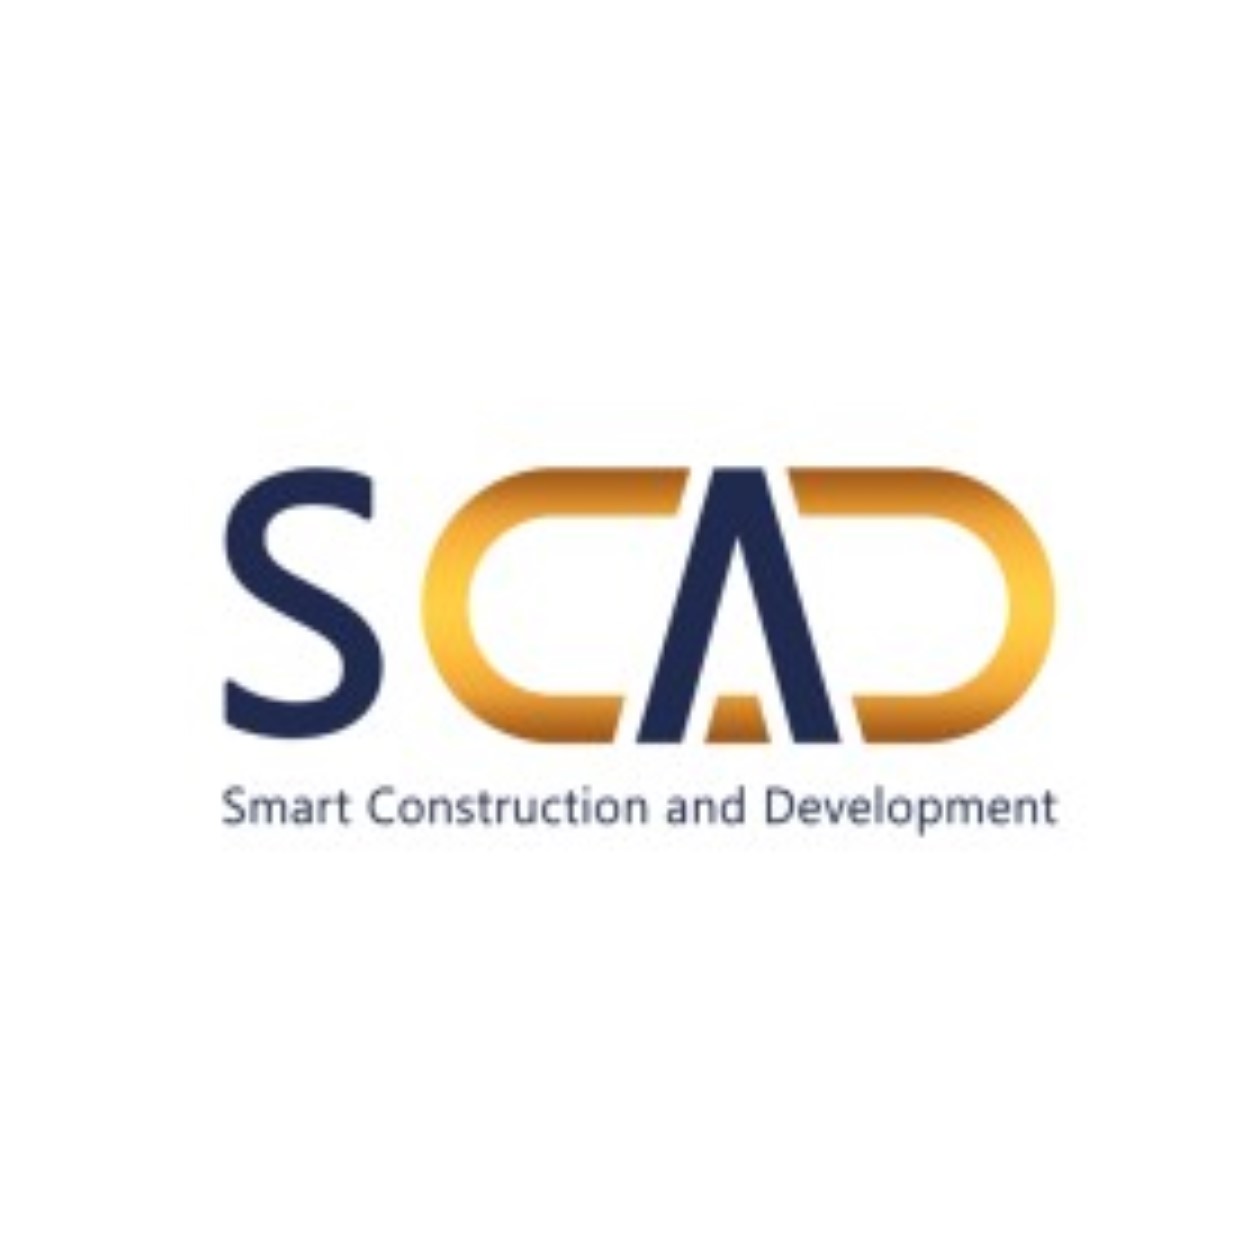 Smart Construction and Development (SCAD)